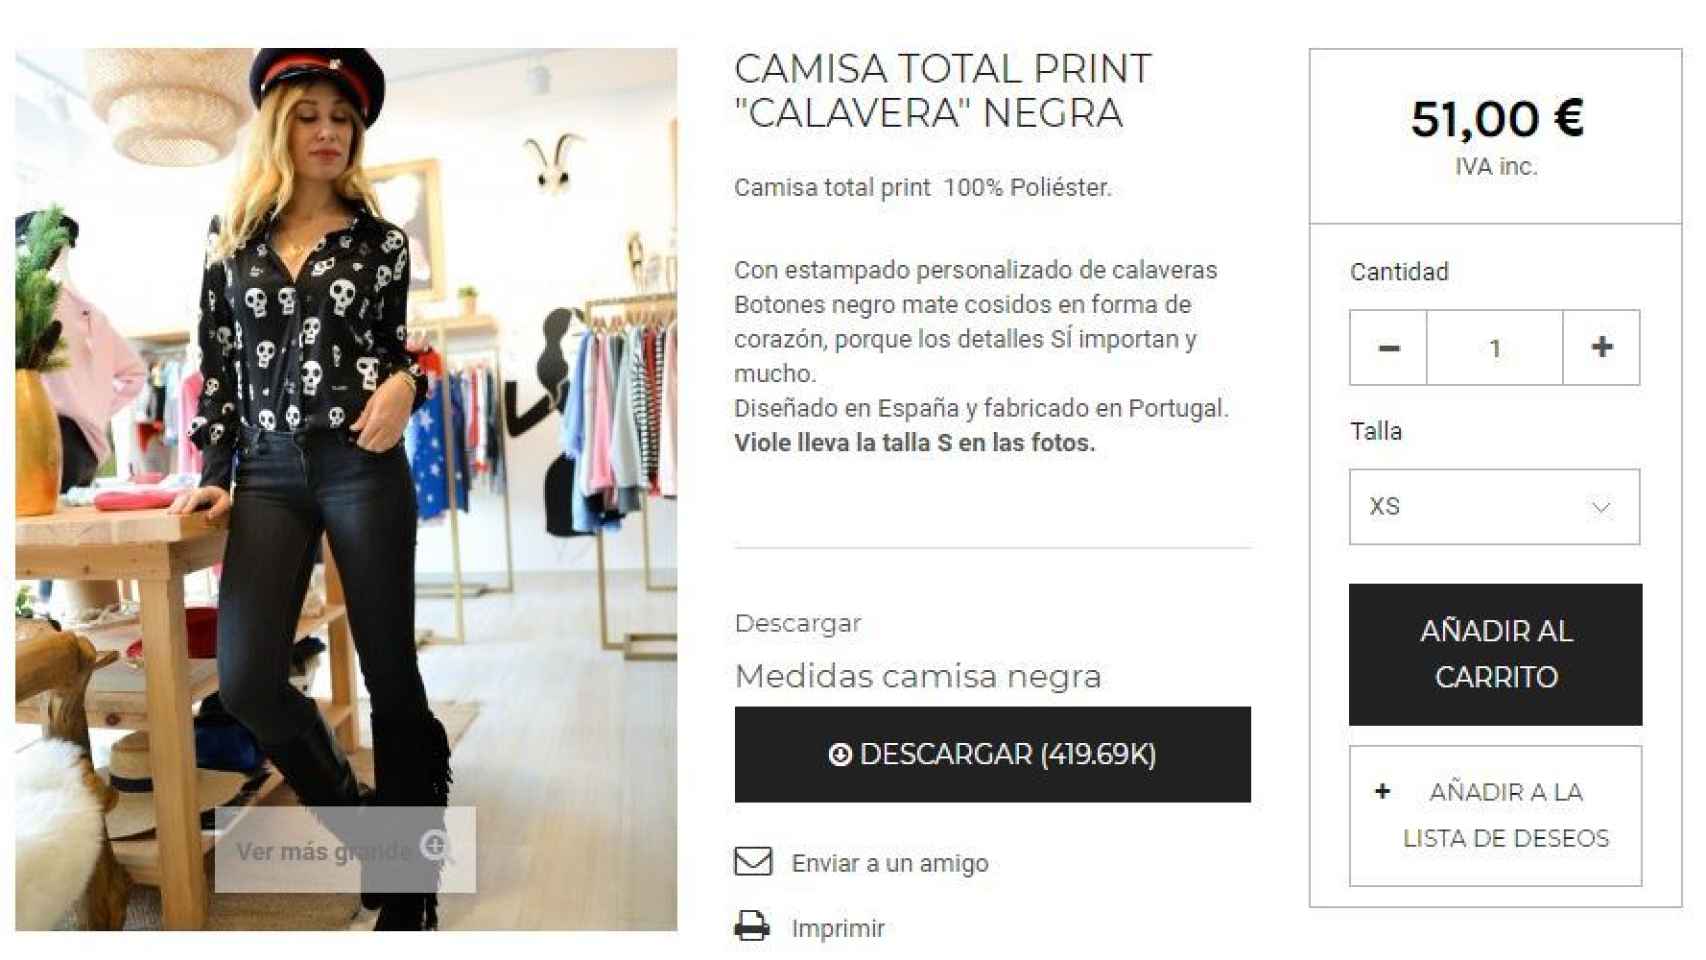 Captura de la compra online  de la camisa.